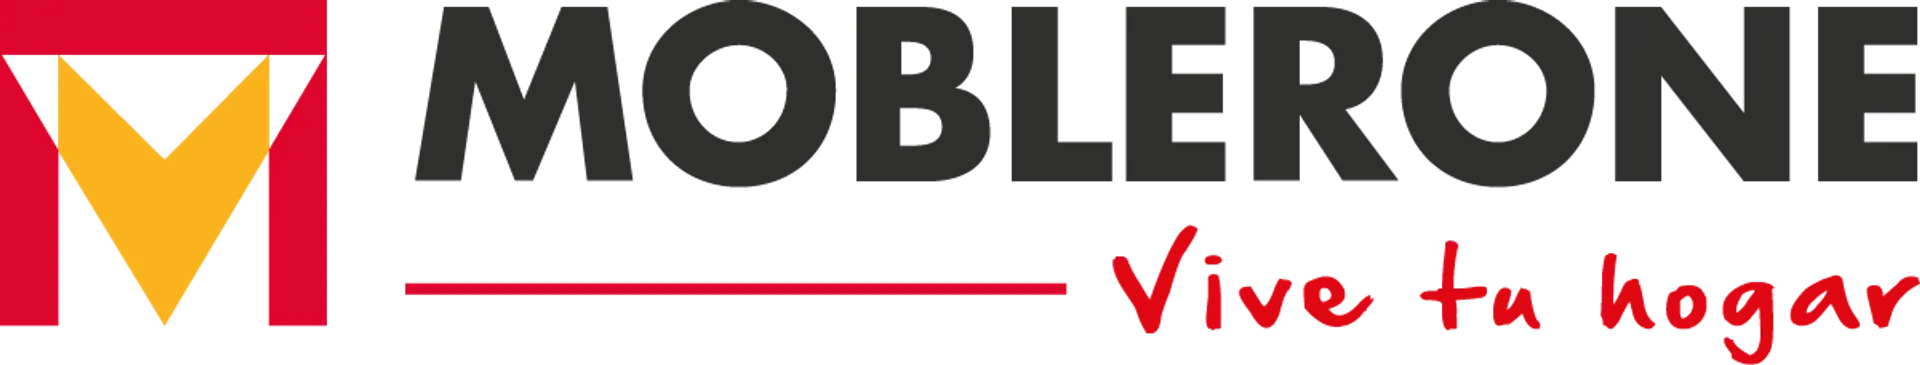 MOBLERONE logo